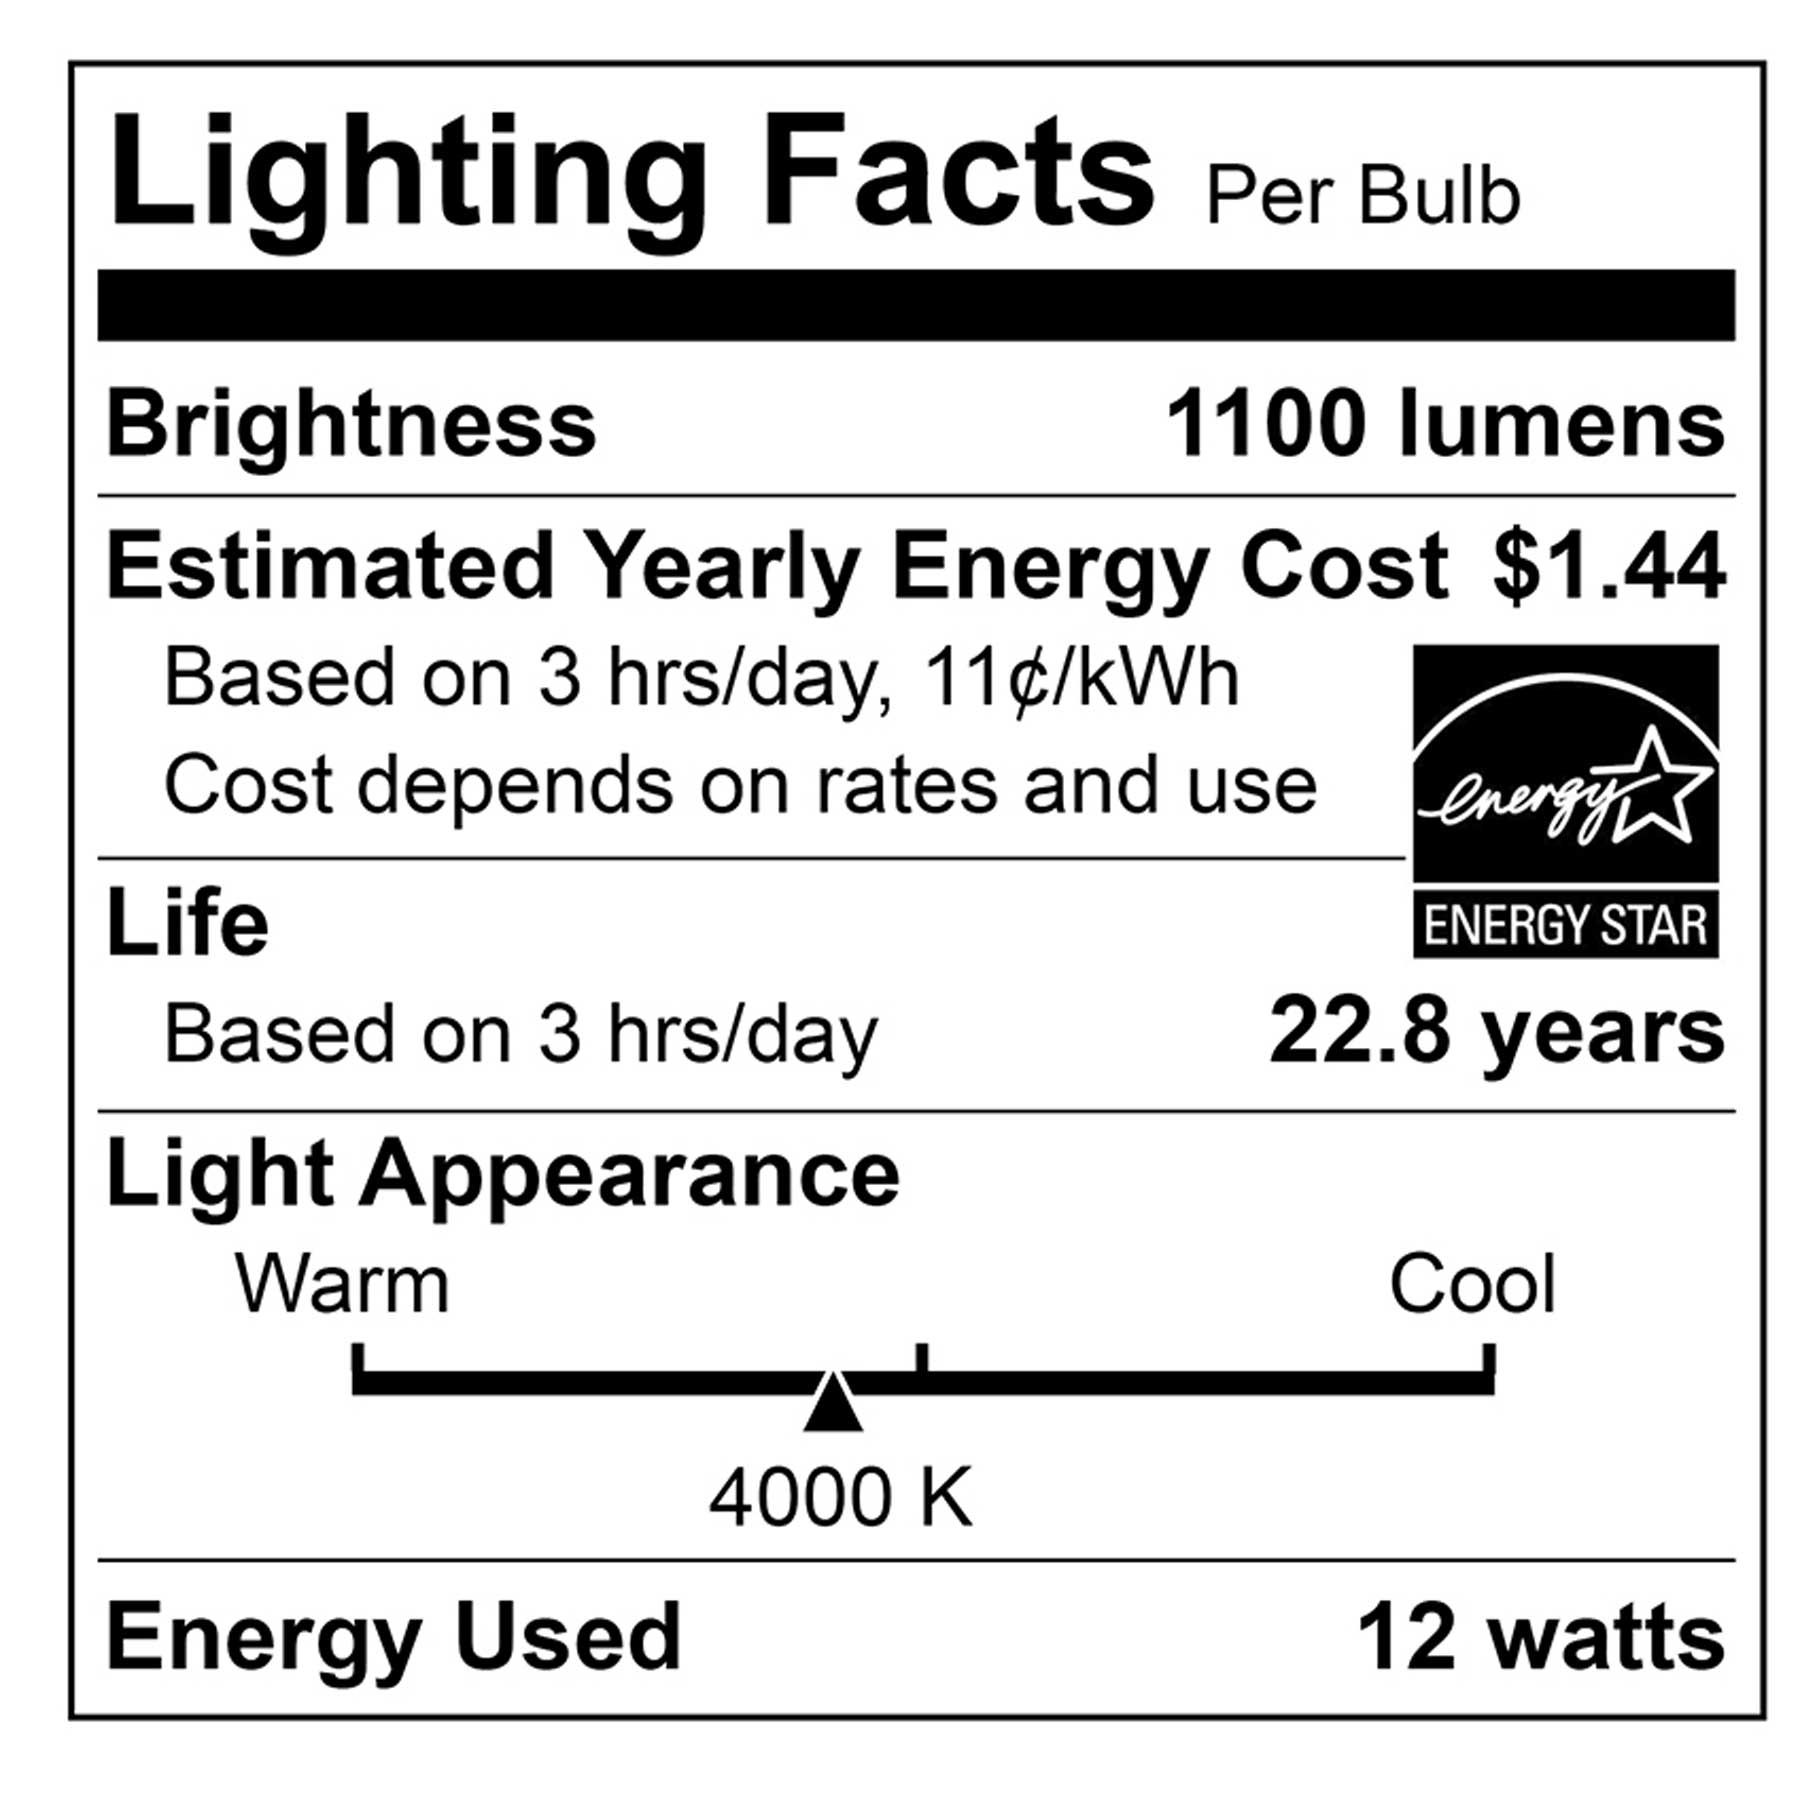 75-Watt Equivalent A19 E26 General Purpose LED Light Bulb, Energy Star